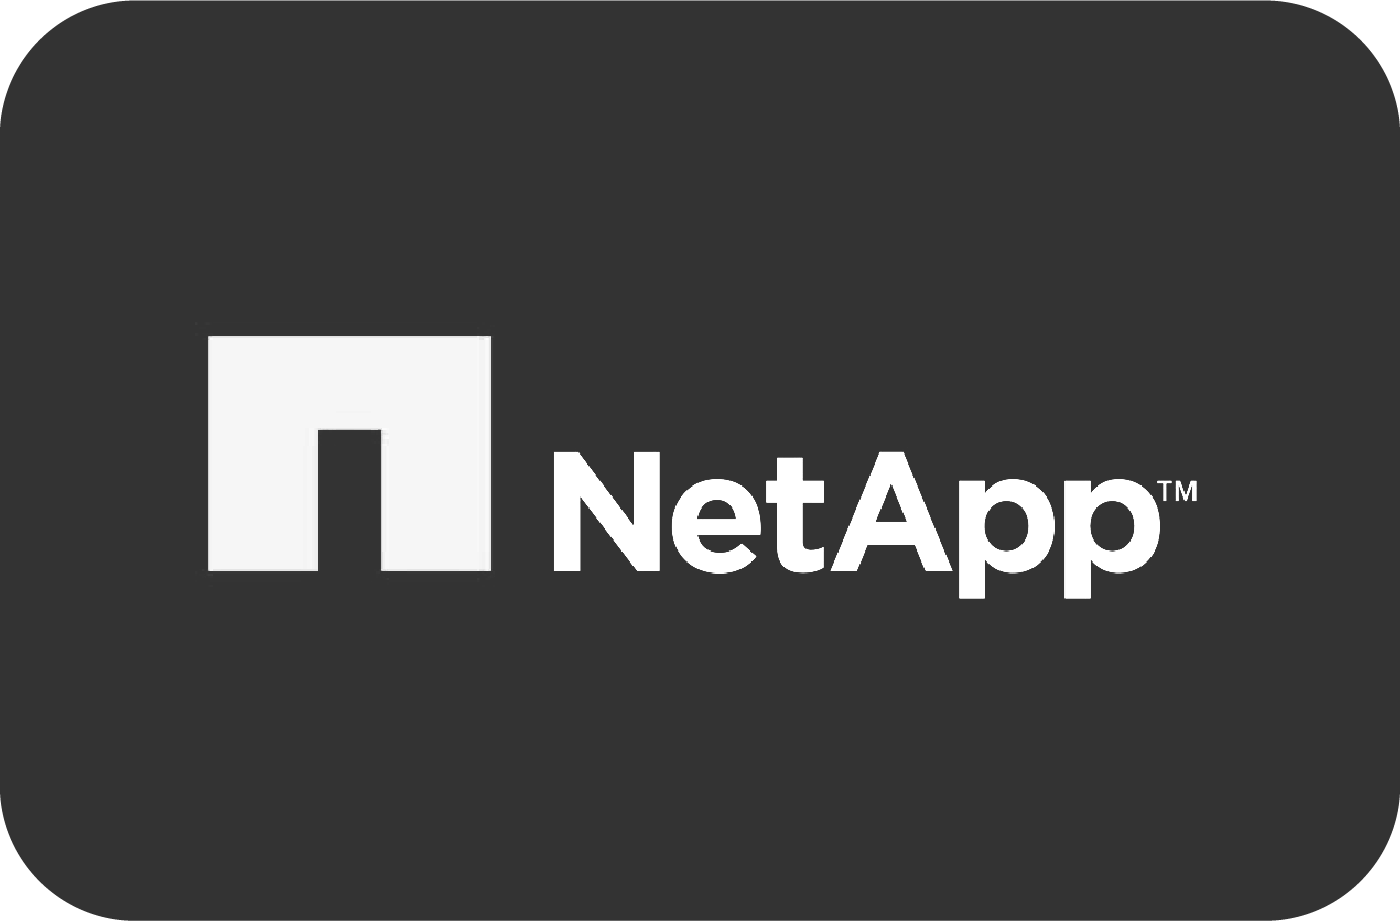 NetApp marketing campaigns